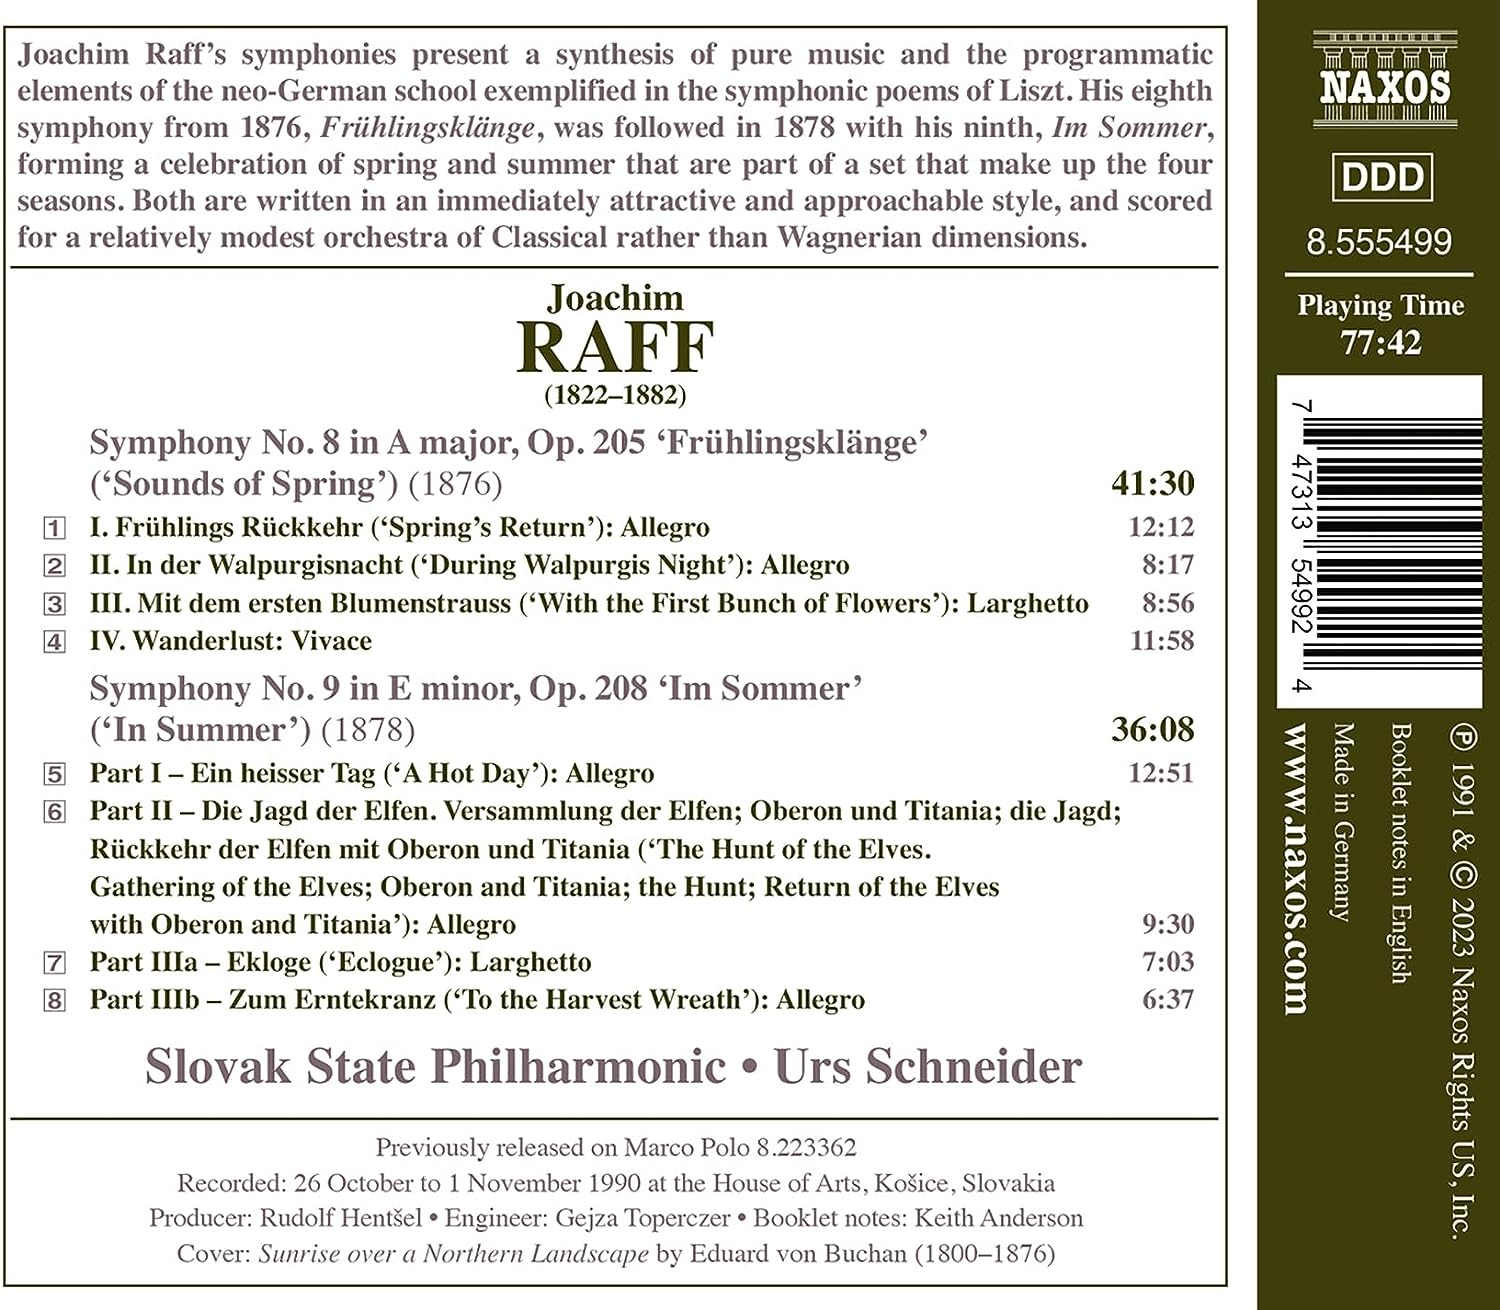 Urs Schneider 요아힘 라프: 교향곡 8번 ‘봄의 소리’ & 교향곡 9번 ‘여름에’ (Raff: Symphonies Nos. 8 & 9)